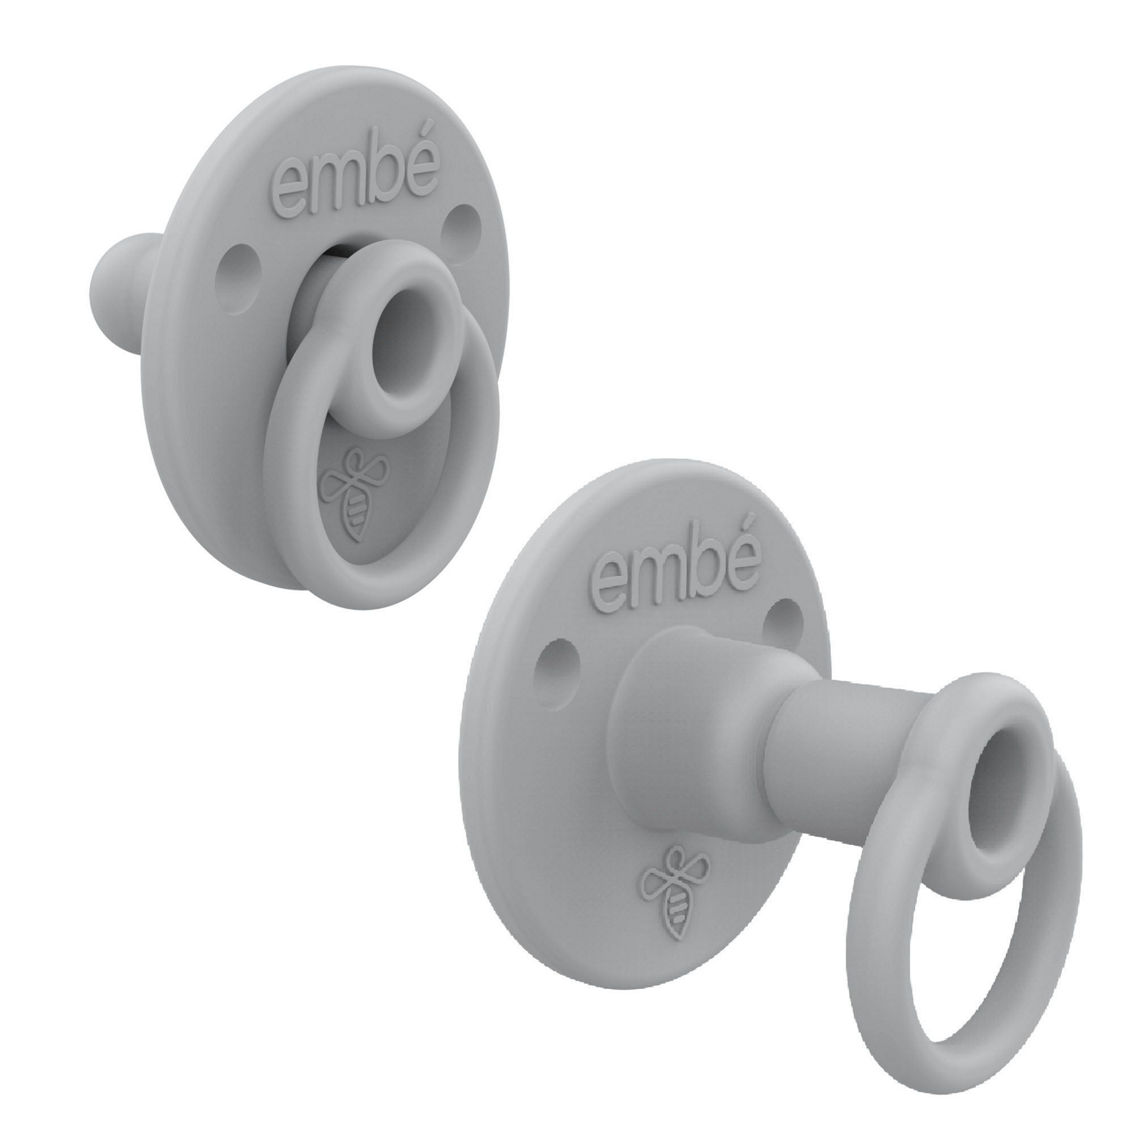 embe Binnie® Stow-Away Pacifier - Image 2 of 5